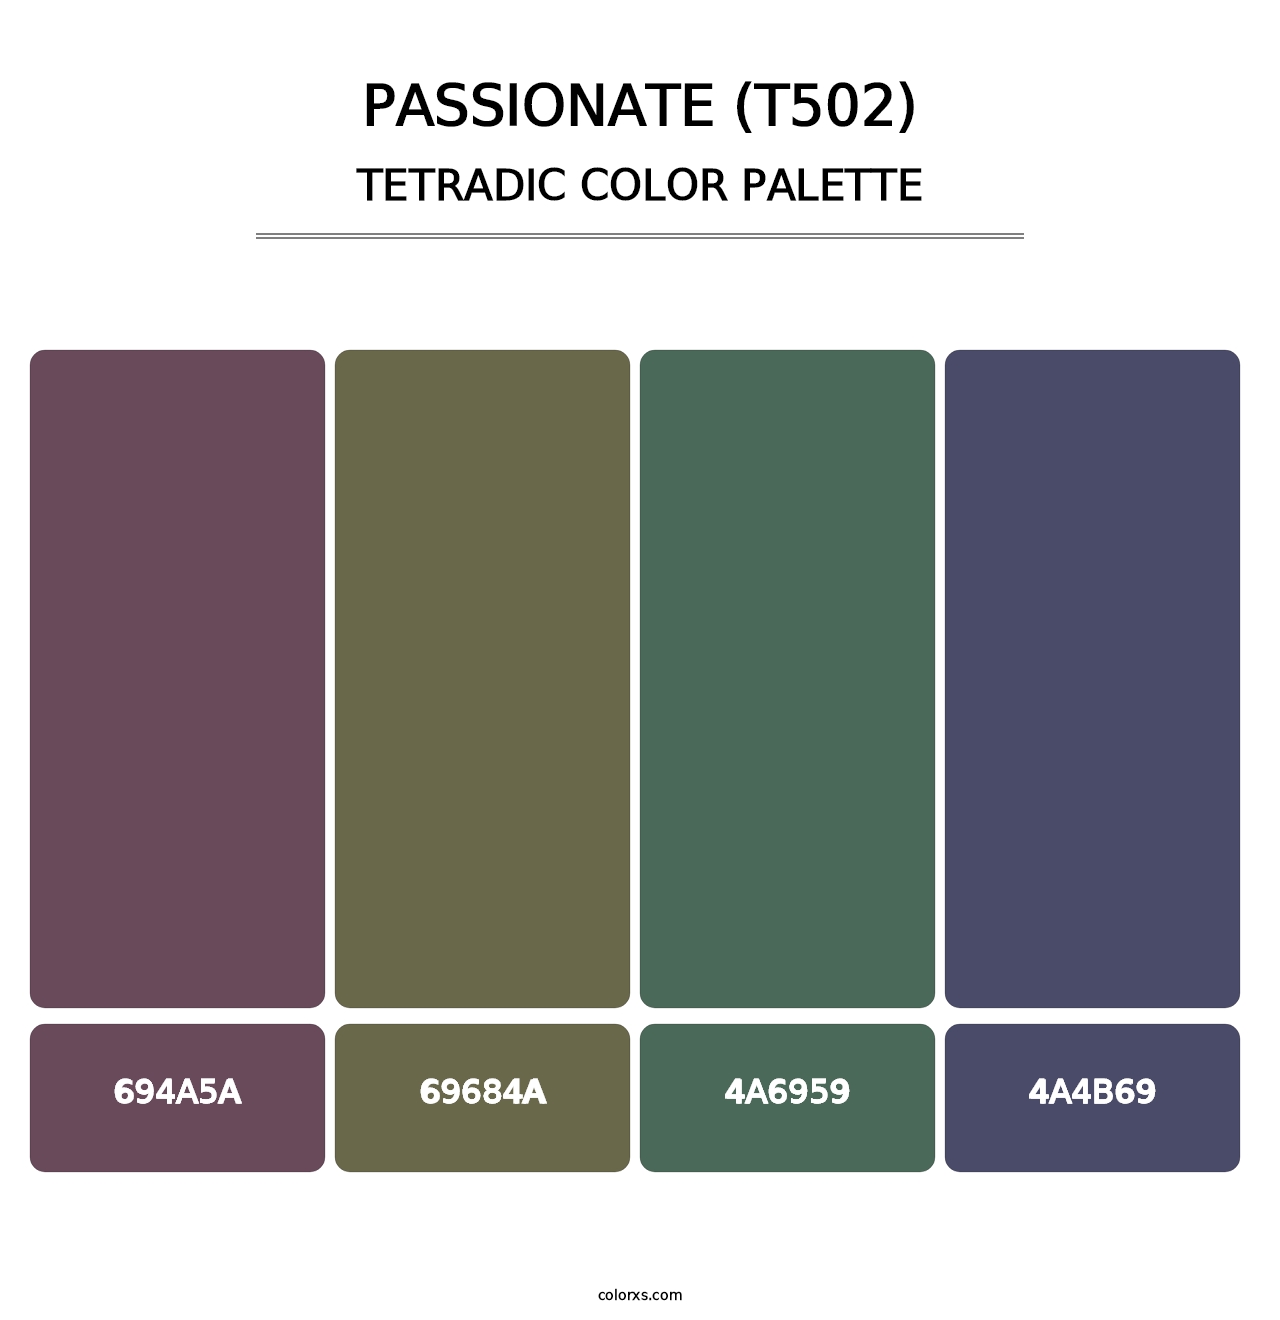 Passionate (T502) - Tetradic Color Palette